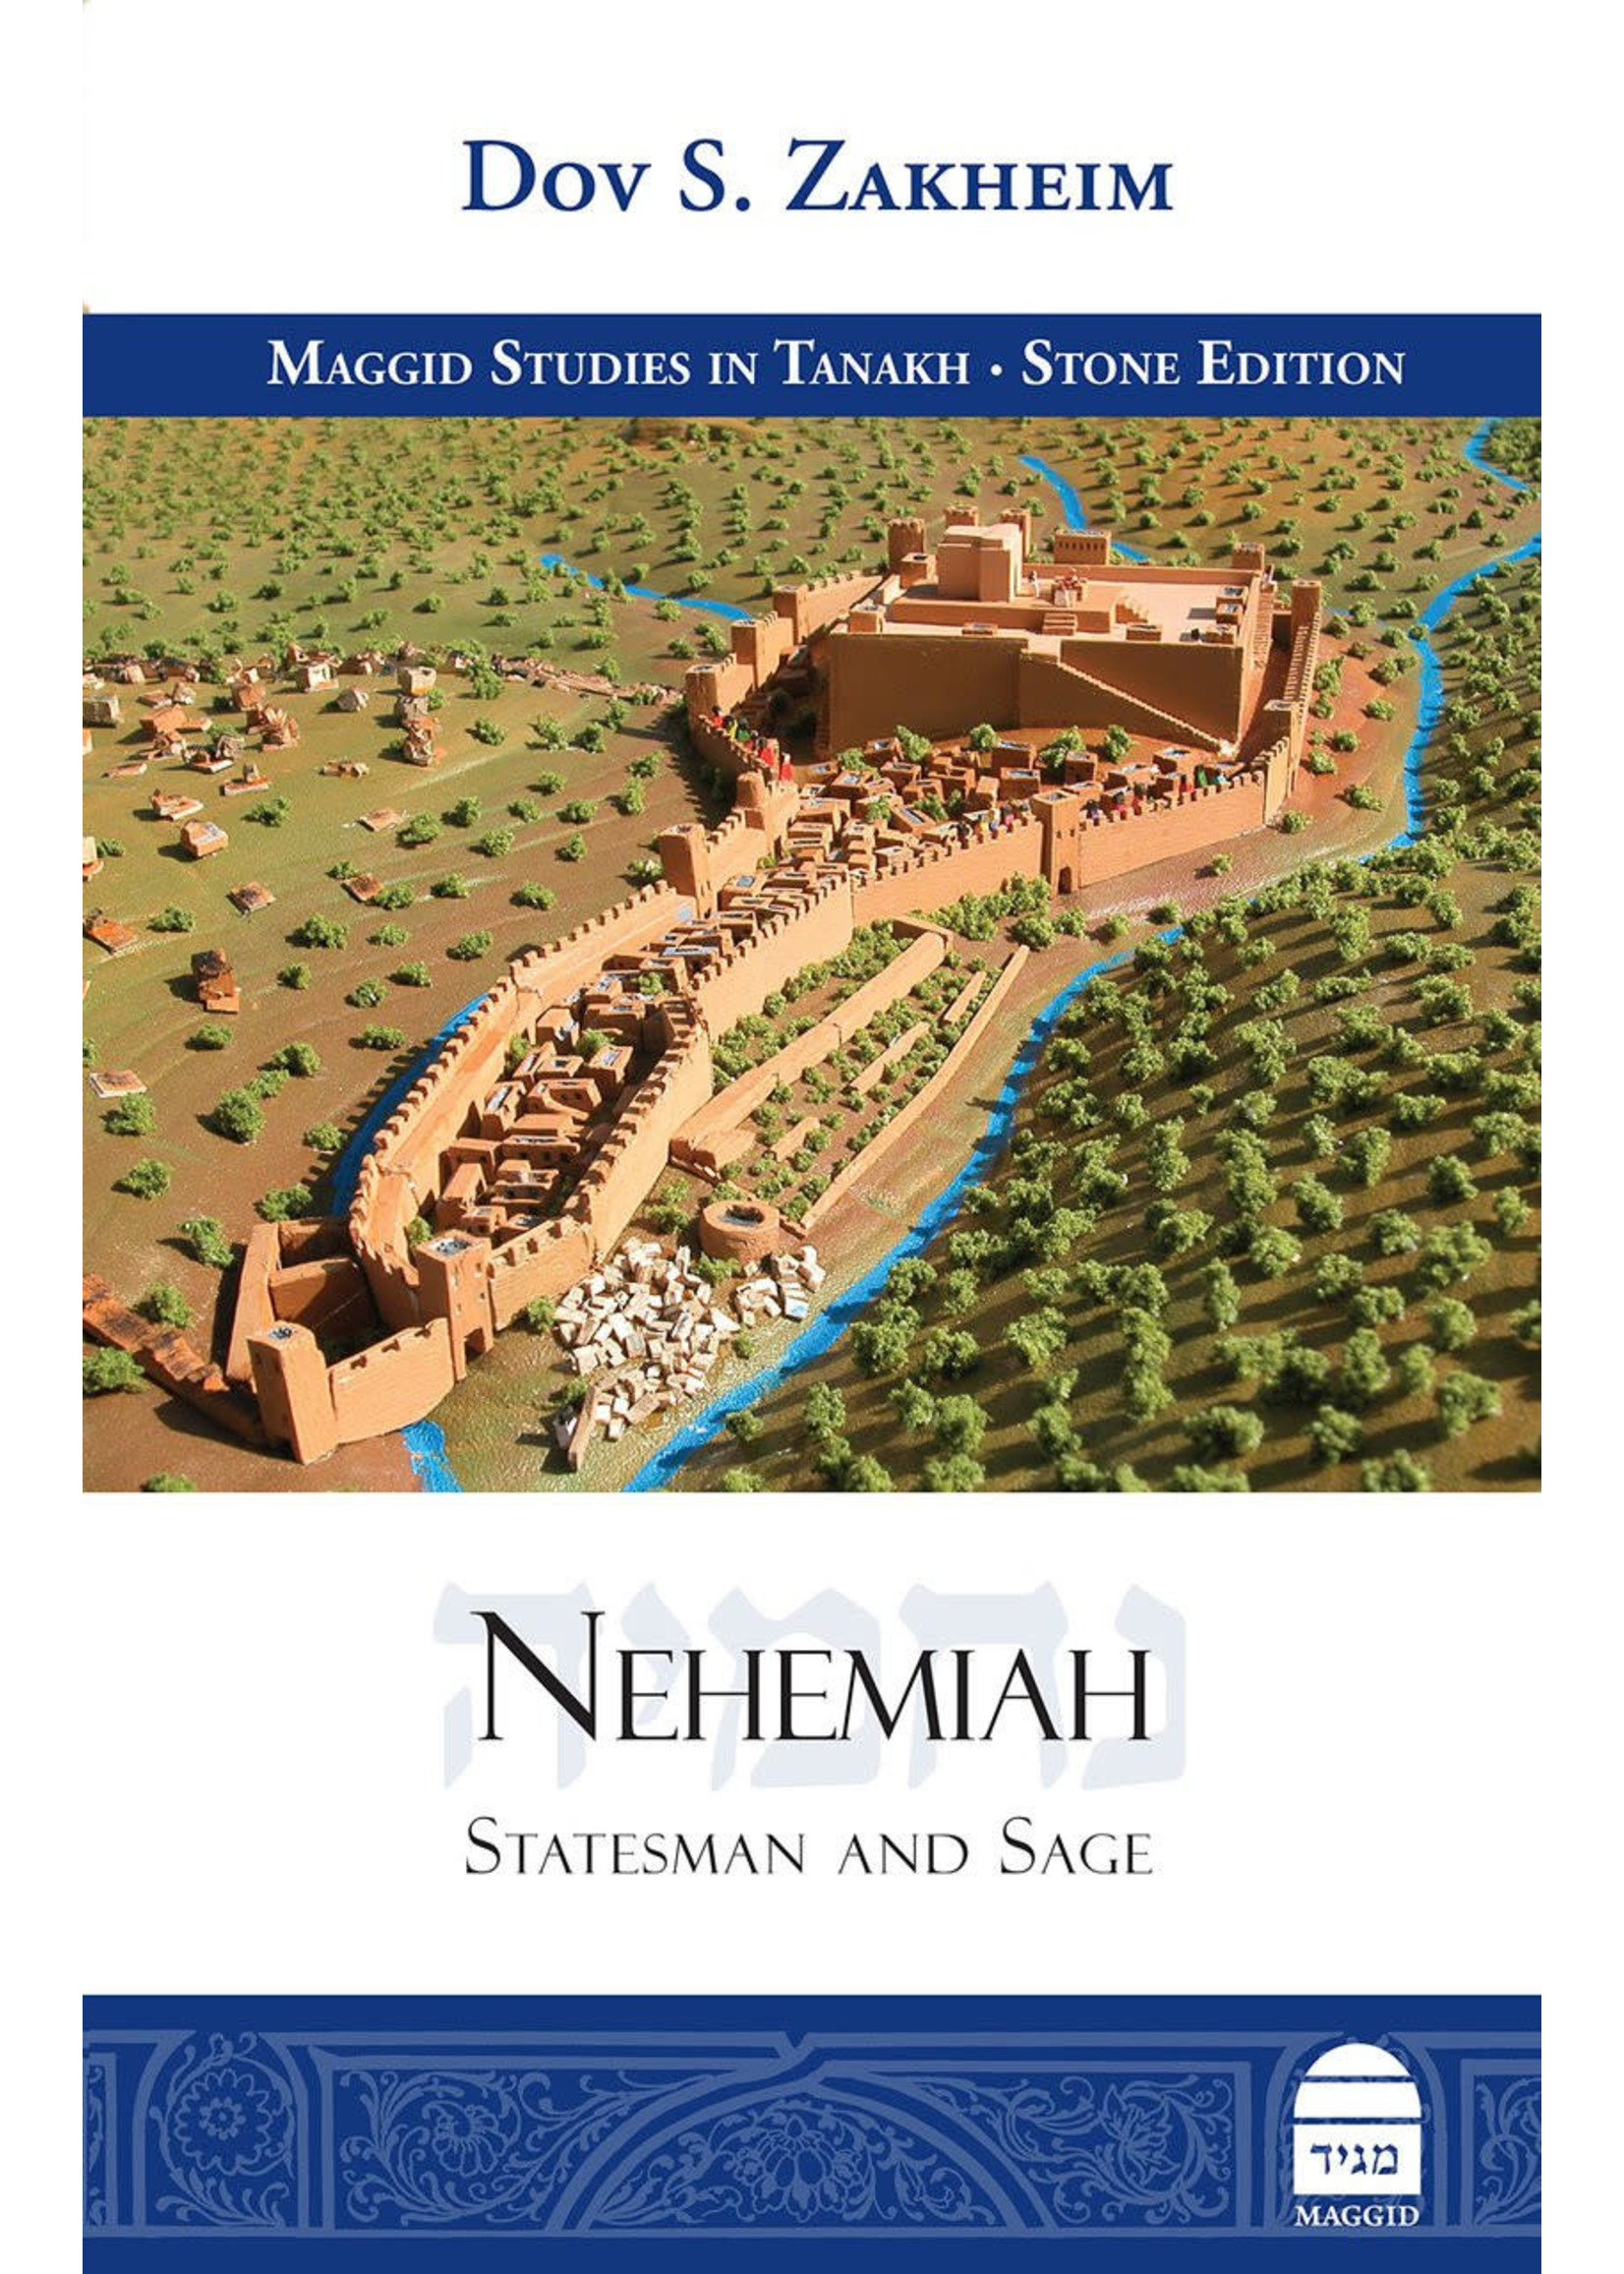 NEHEMIAH - STATESMAN AND SAGE